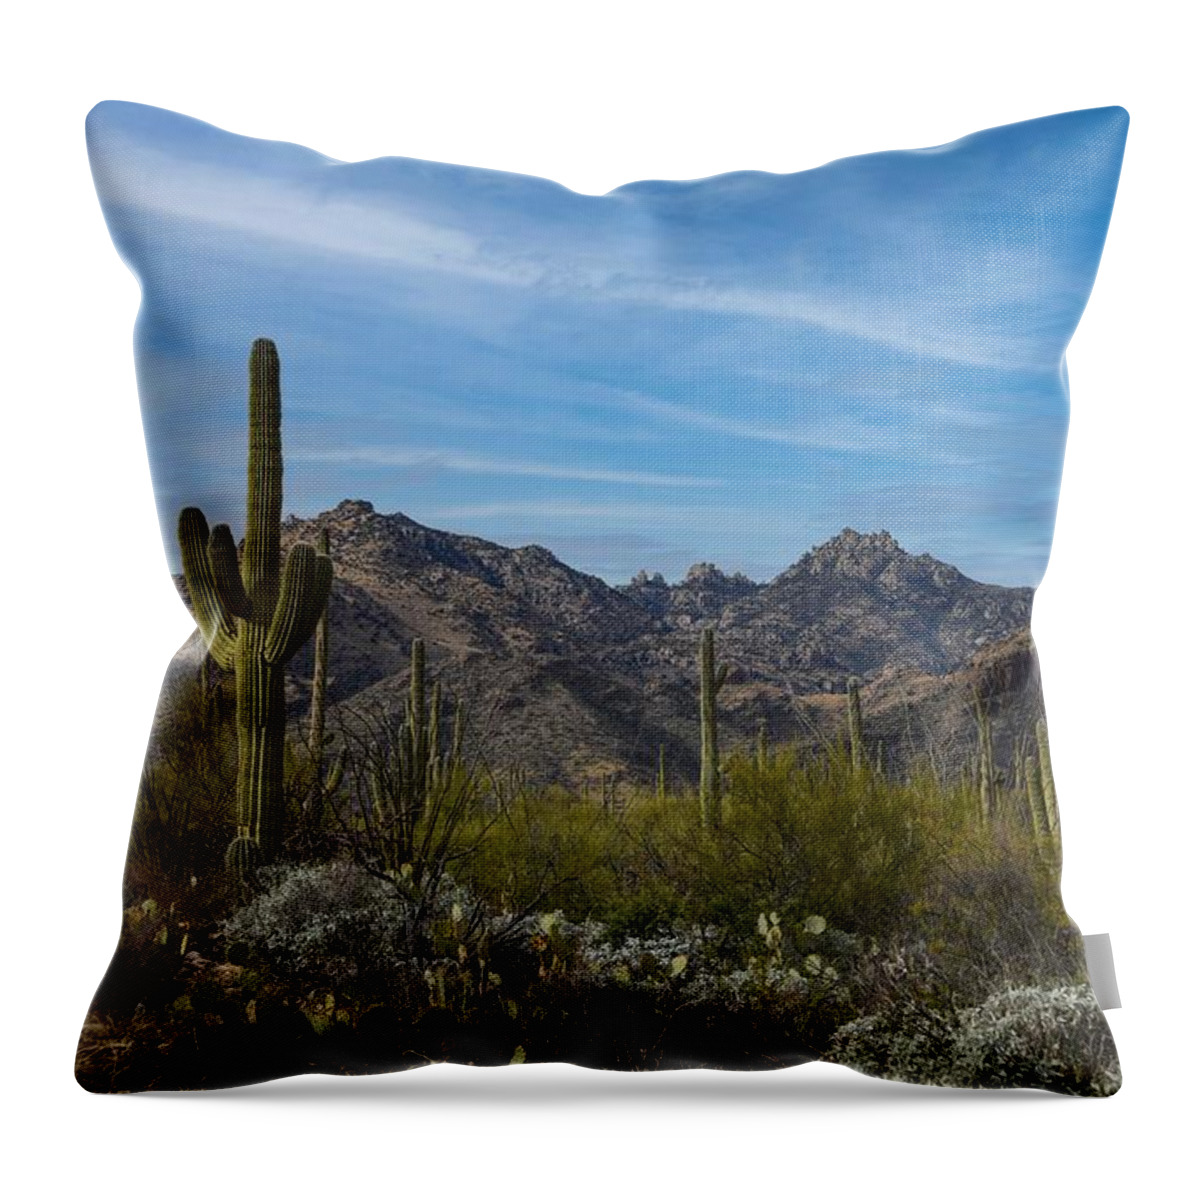 Sabino Arizona Throw Pillow featuring the digital art Sabino Arizona by Tammy Keyes